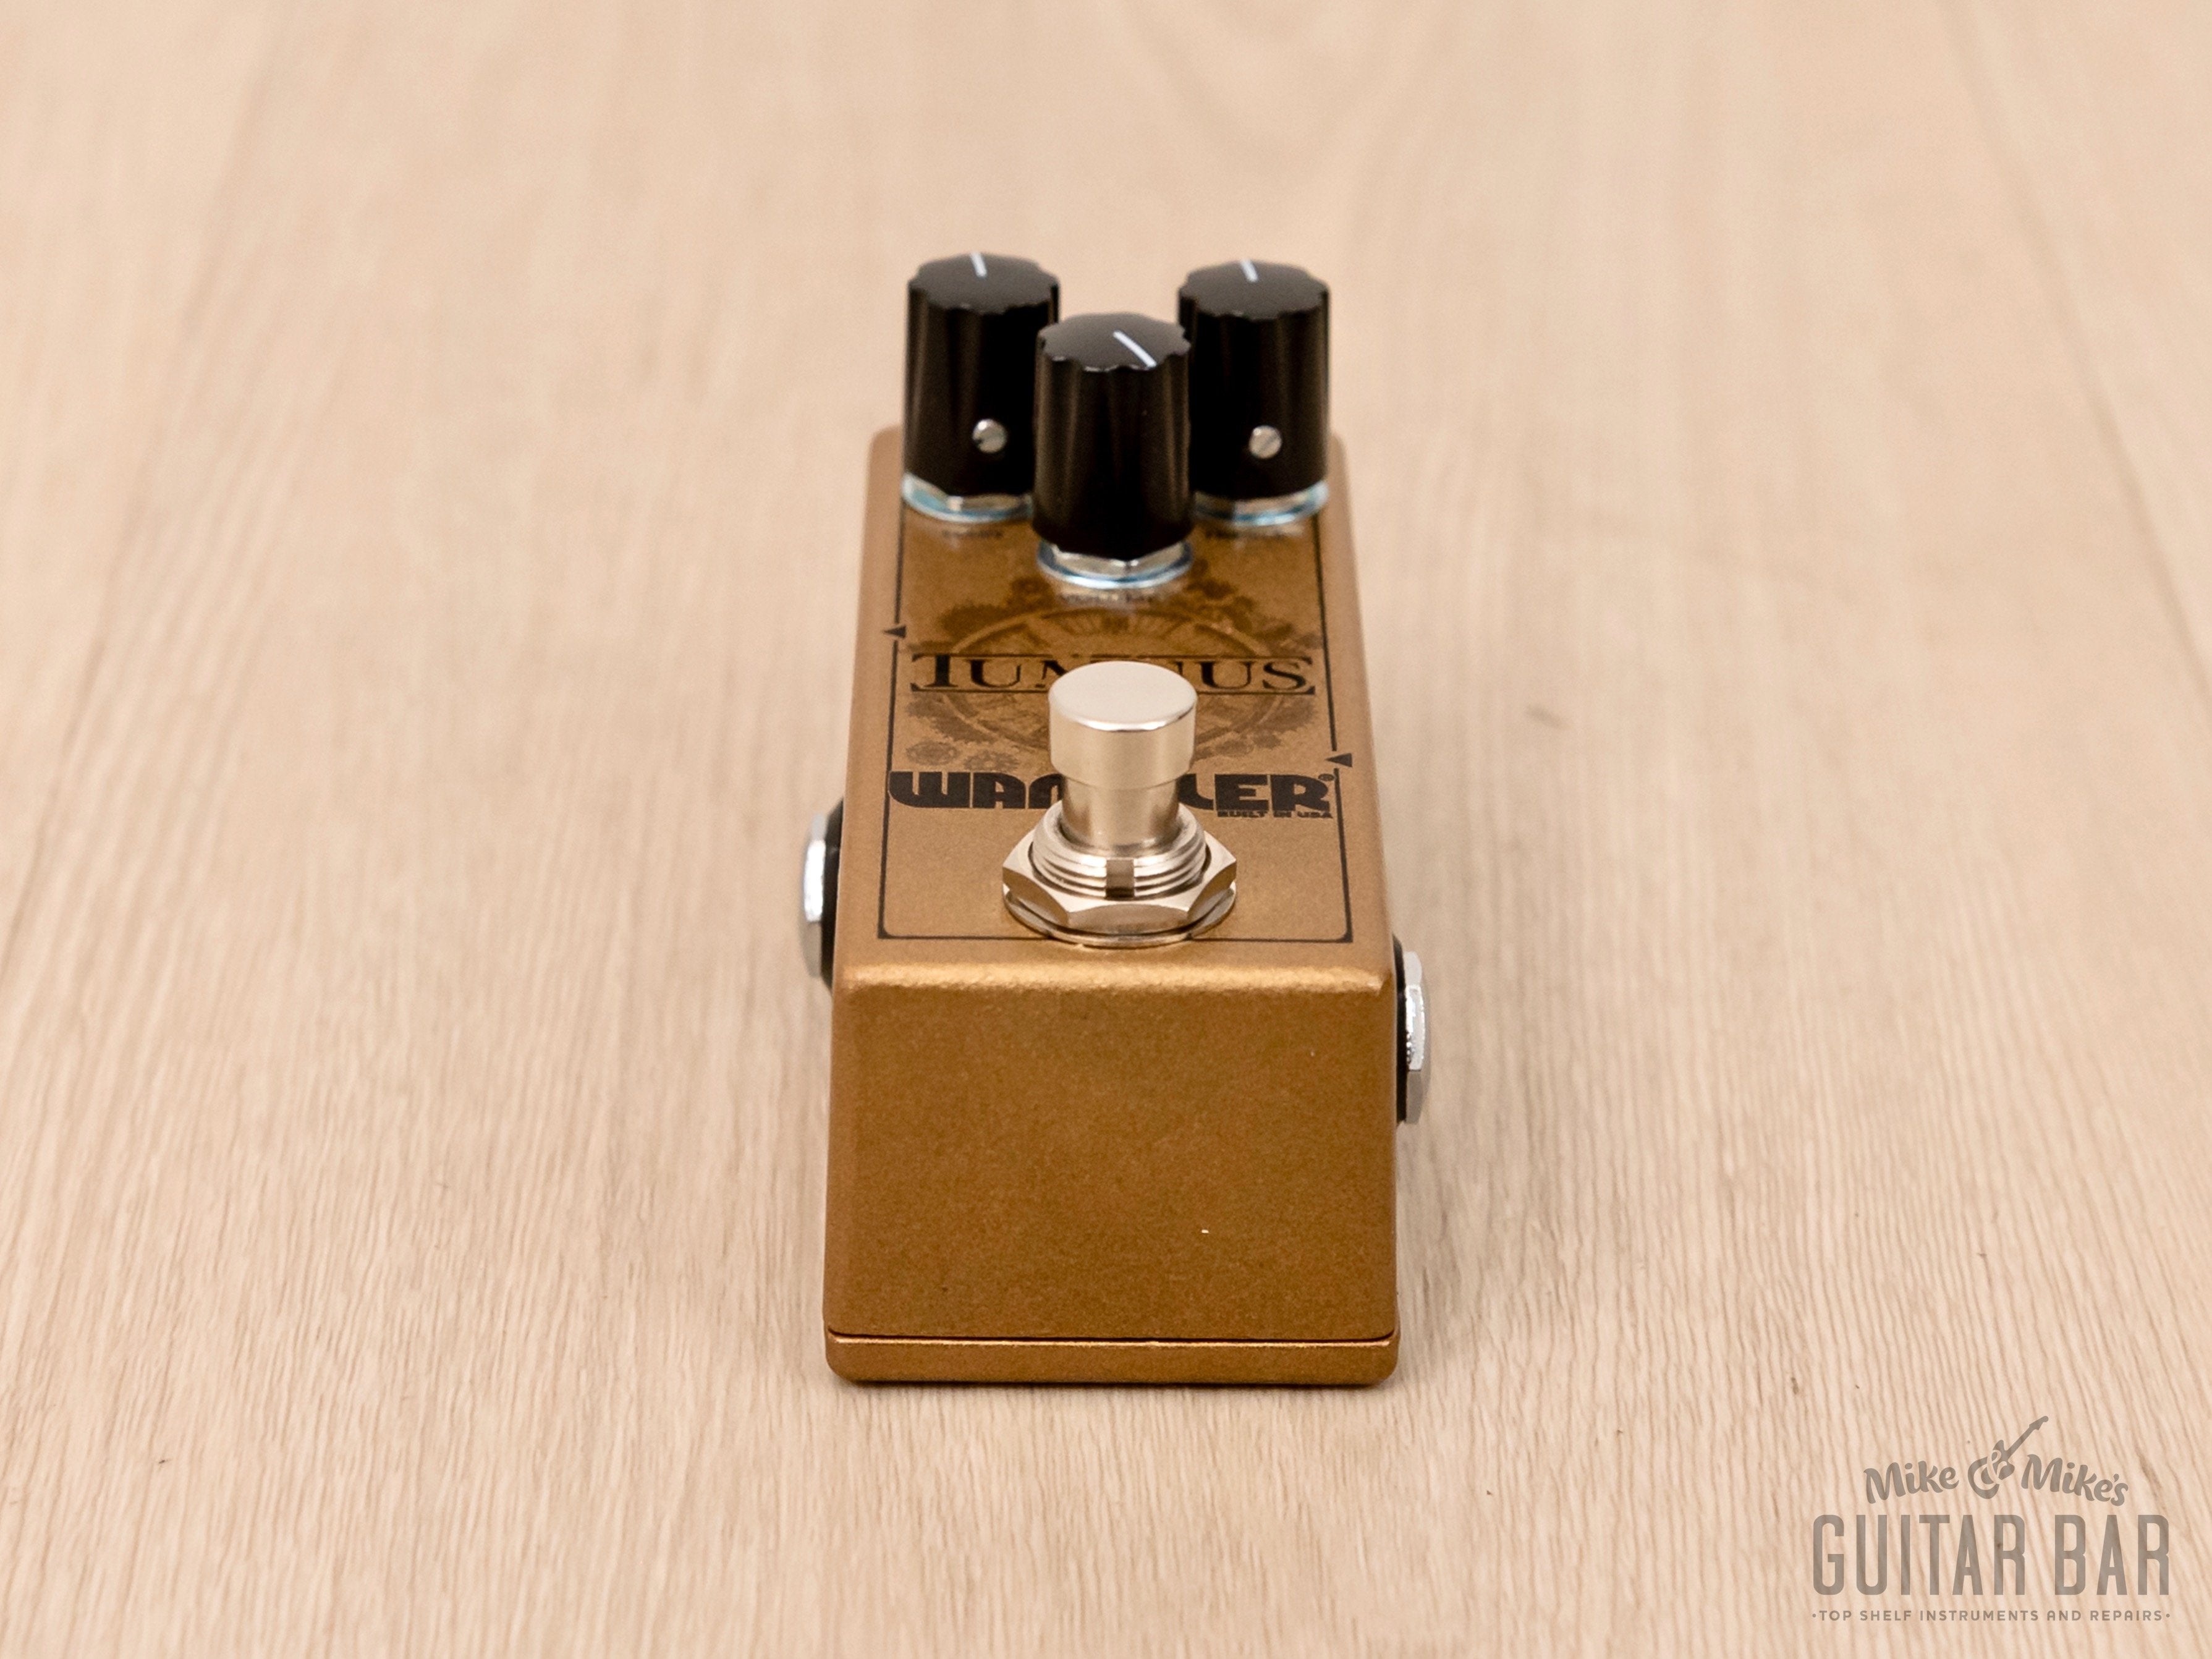 Wampler Tumnus Overdrive Klone Guitar Effects Pedal w/ Box